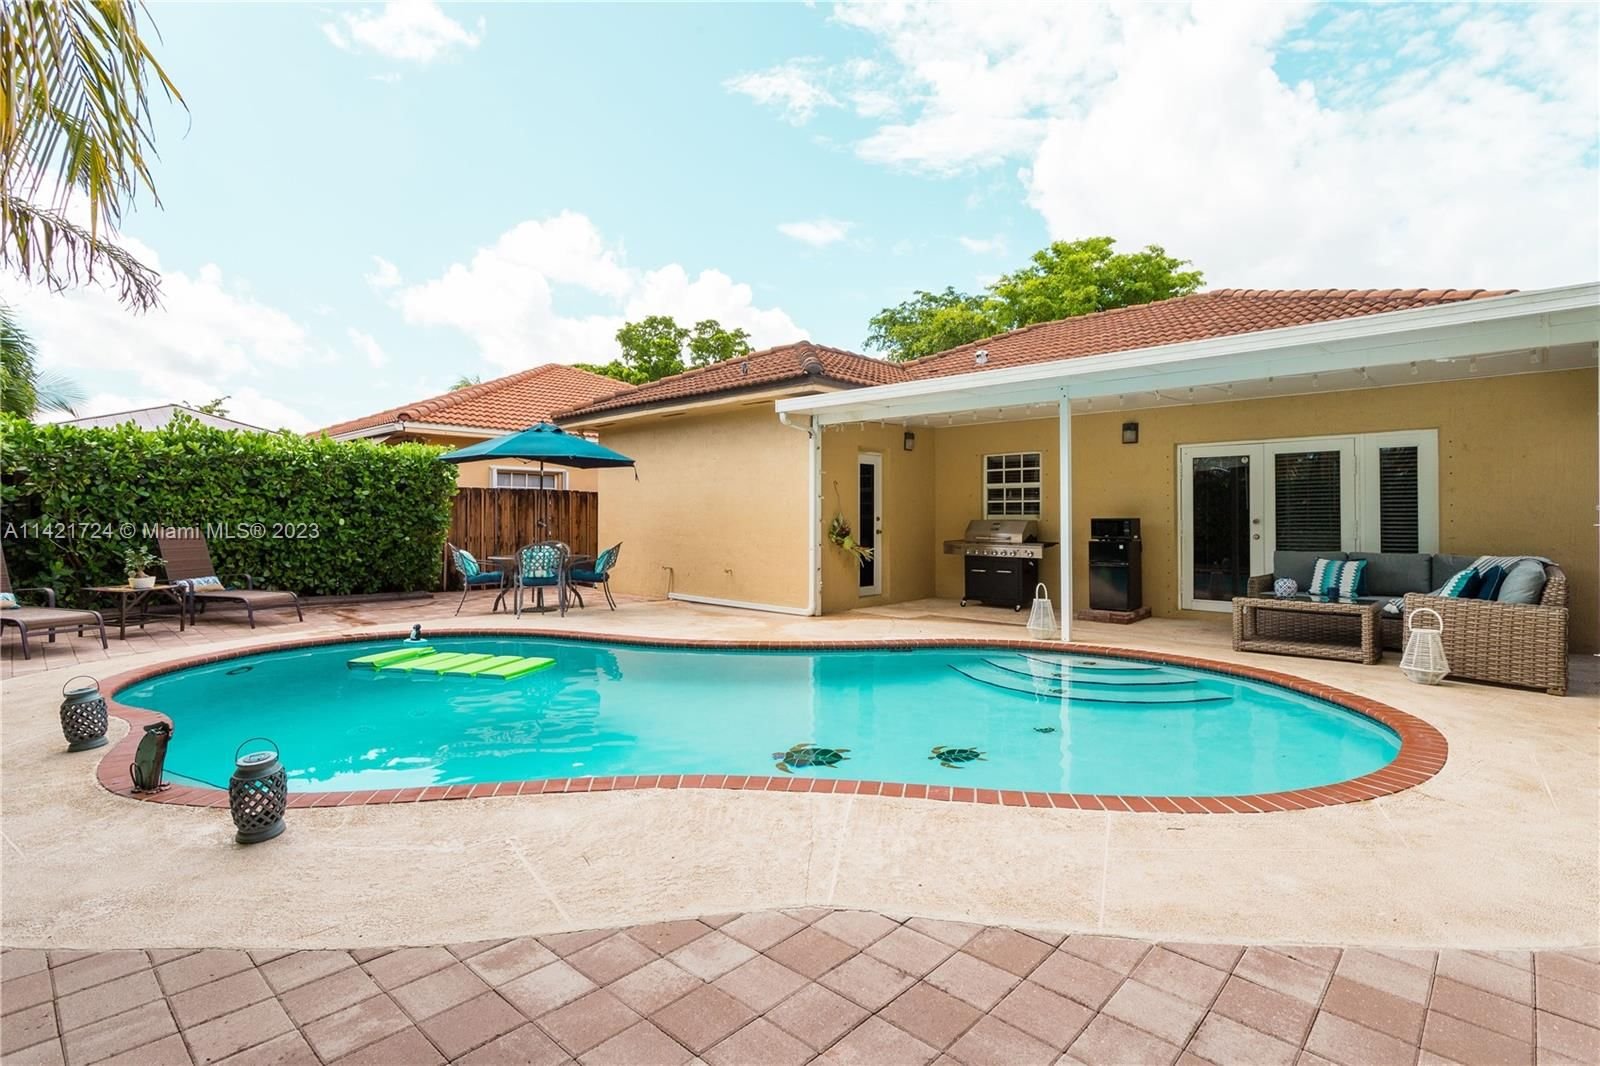 Real estate property located at 18021 144th Ct, Miami-Dade County, Miami, FL